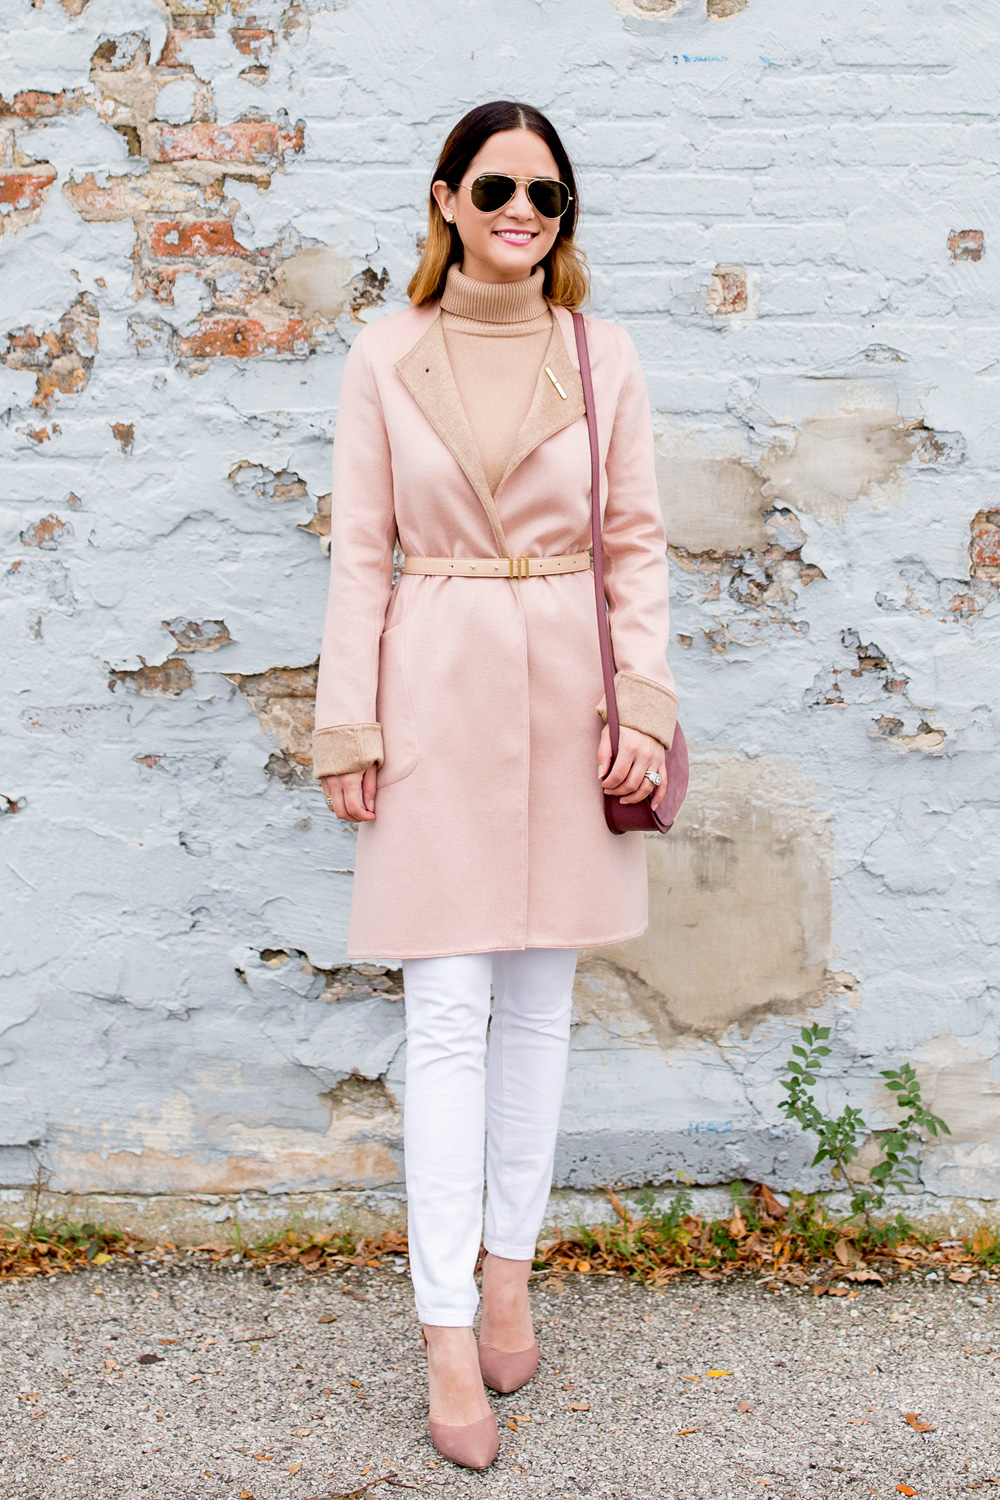 Jennifer lake in a Cuyana pink cashmere coat, belt, and saddle bag